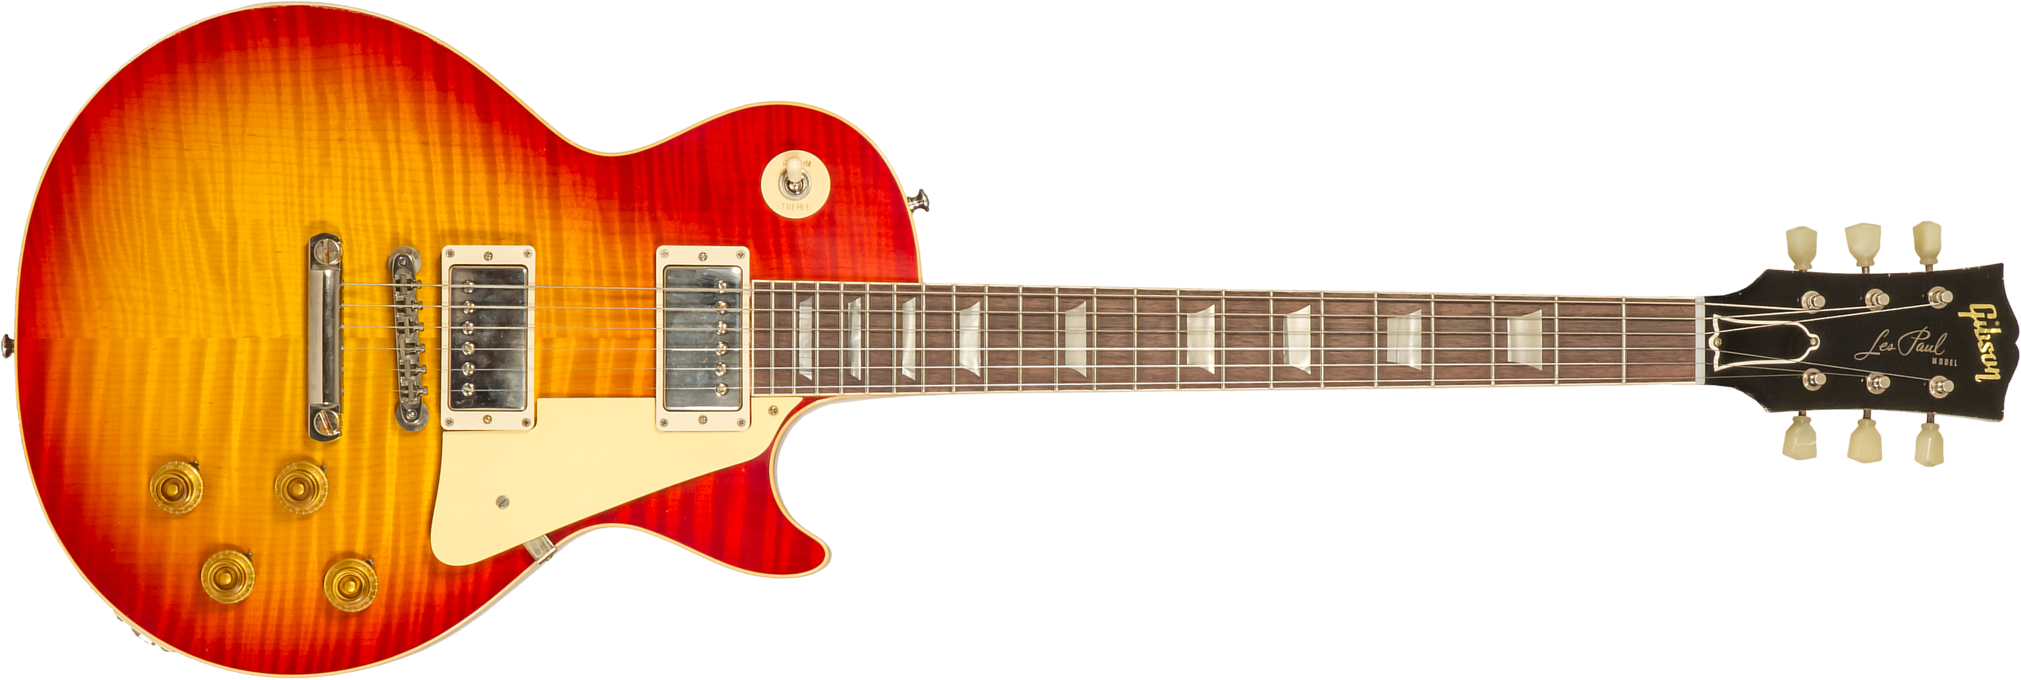 Gibson Custom Shop M2m Les Paul Standard 1959 Reissue 2h Ht Rw #94389 - Murphy Lab Light Aged Washed Cherry Sunburst - Single cut electric guitar - Ma